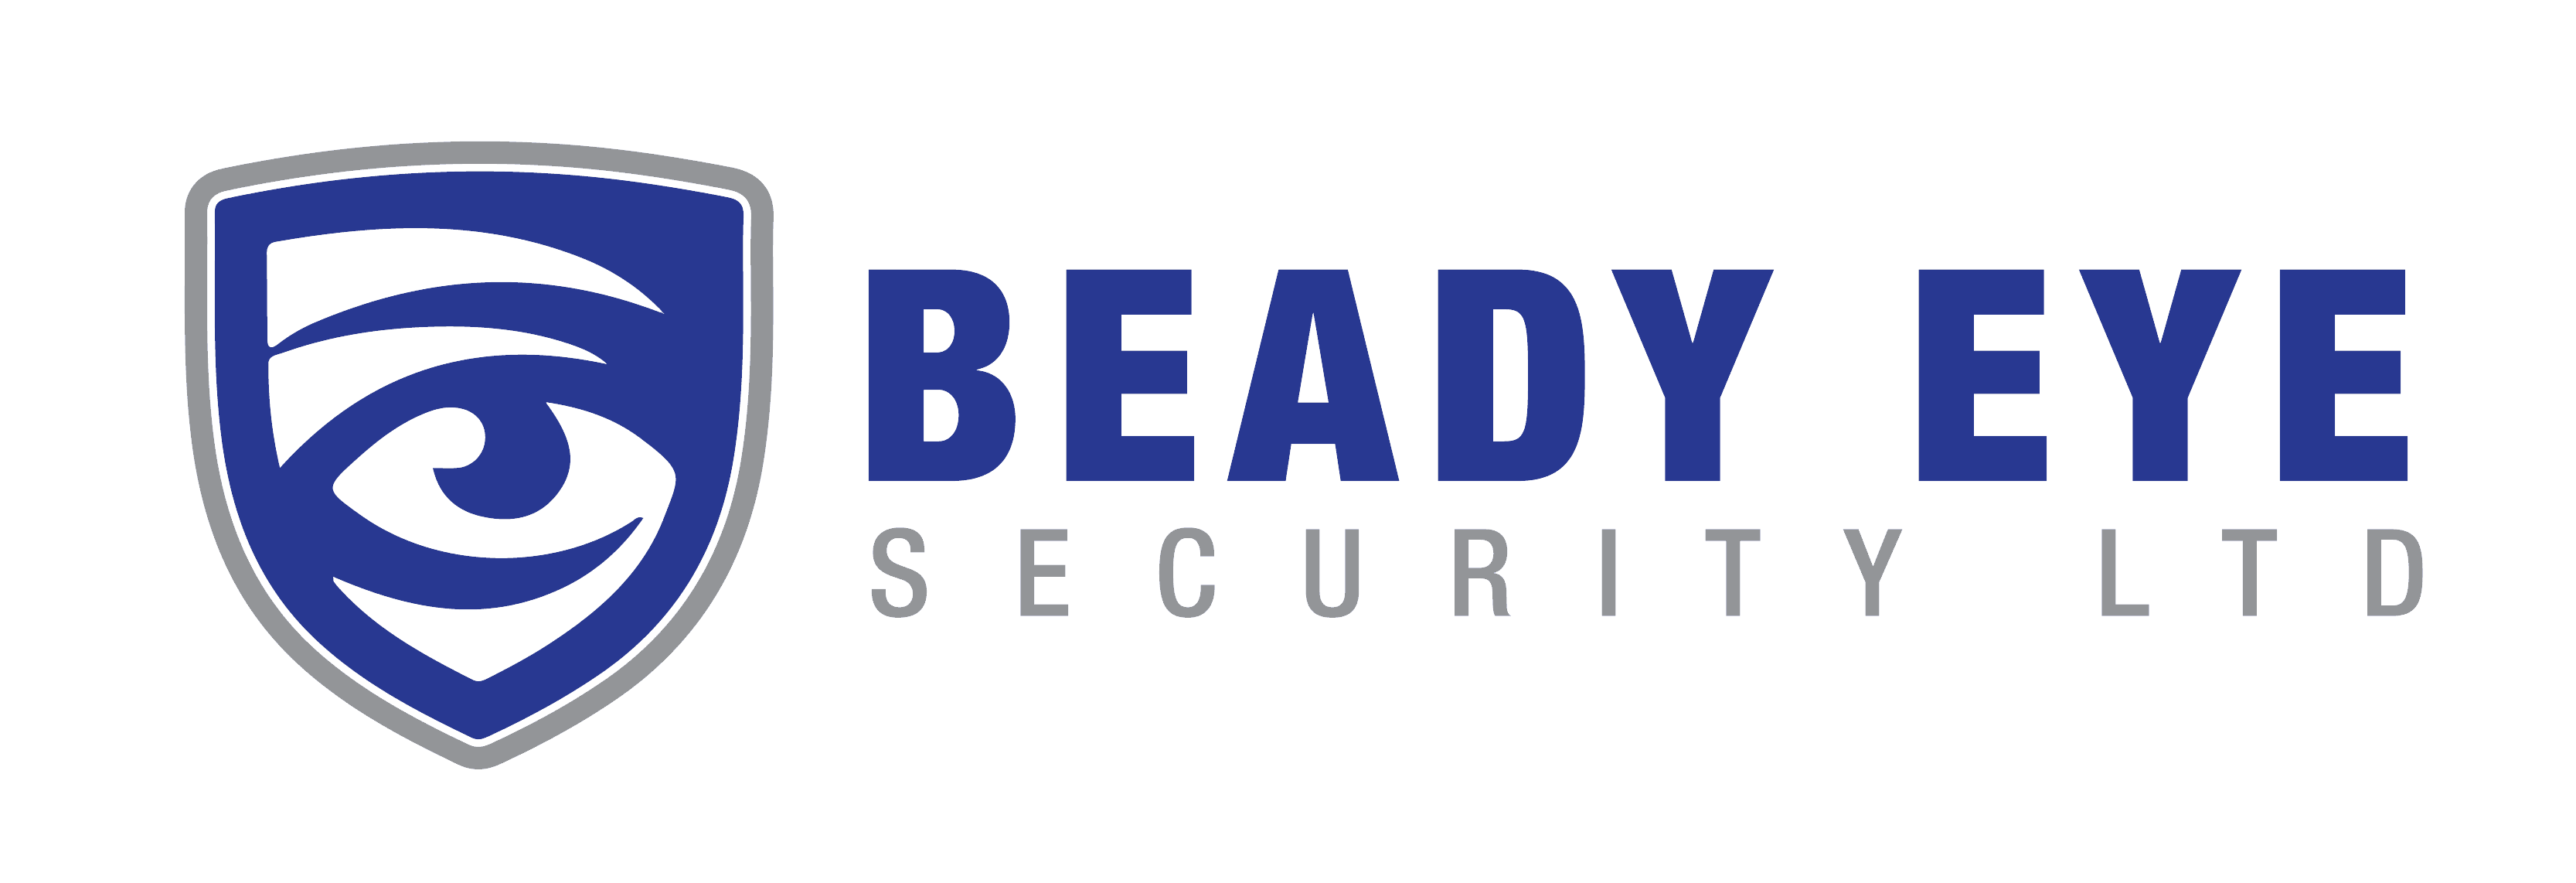 Beady Eye Security Logo